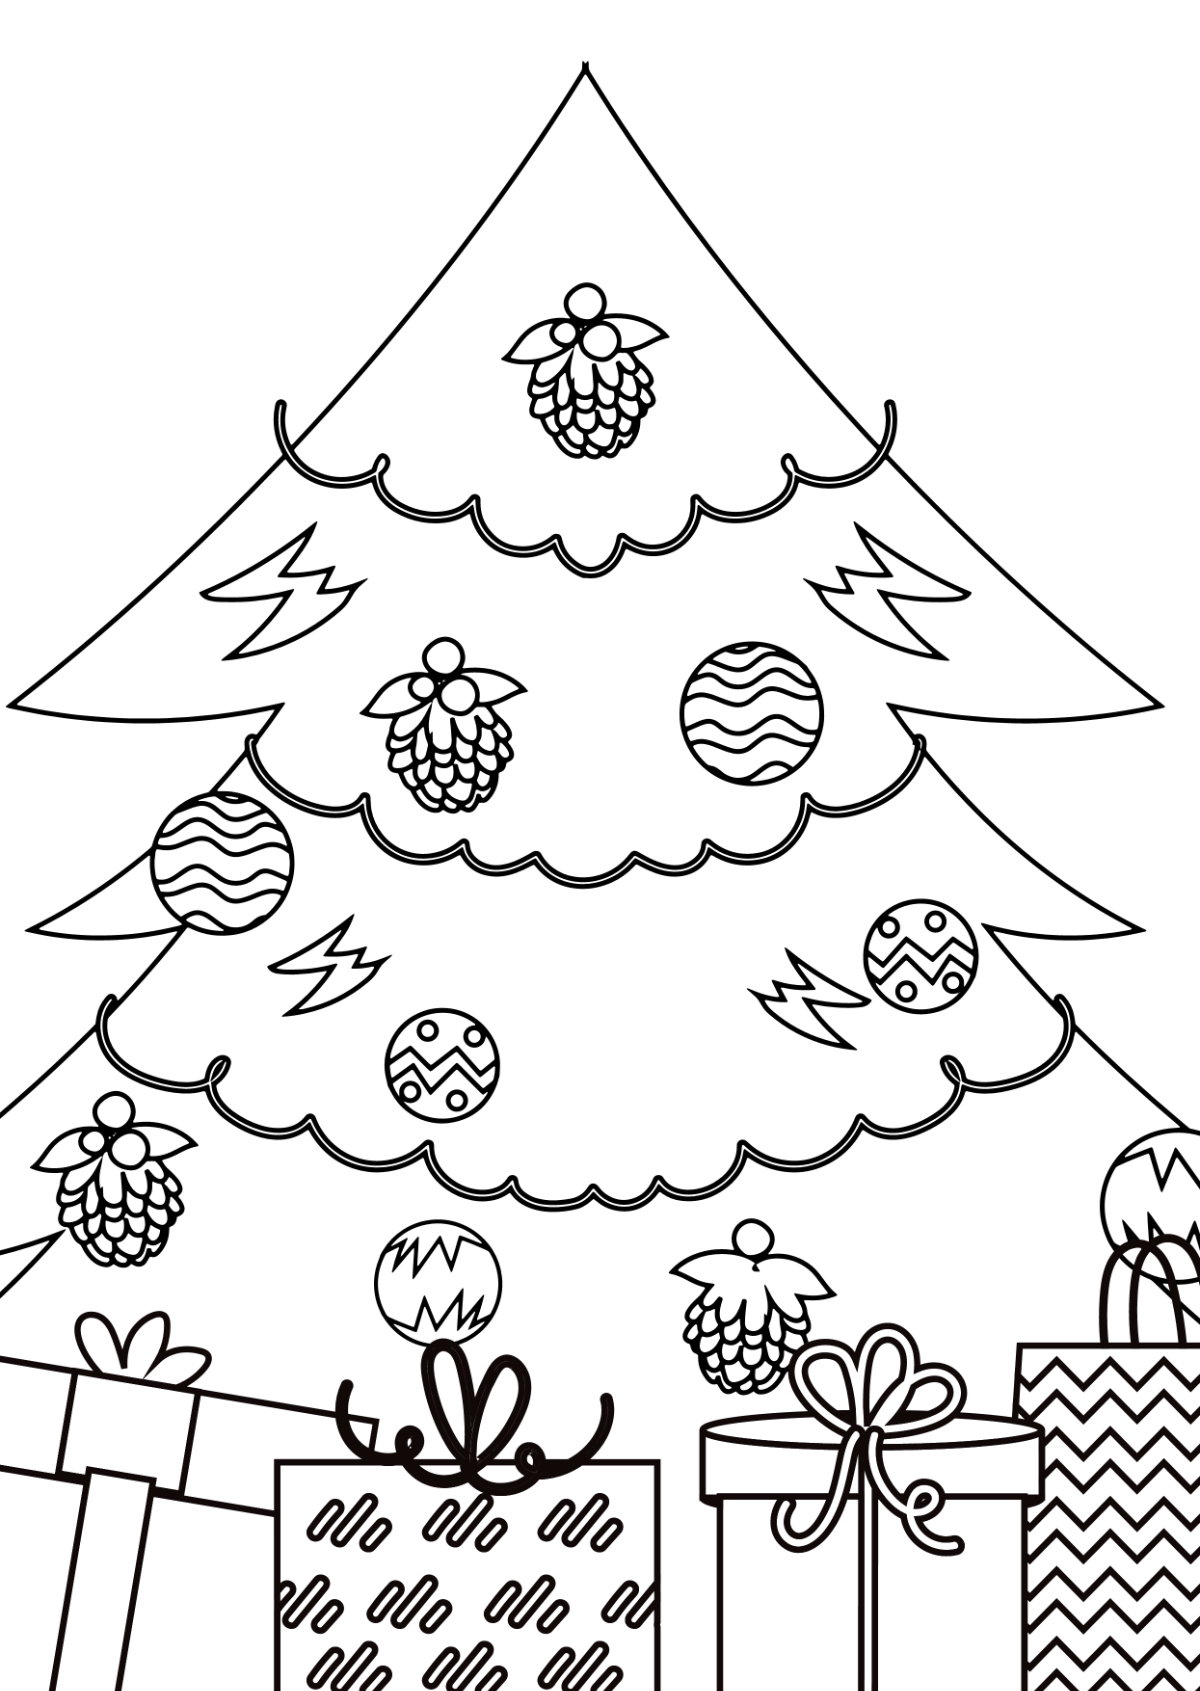 Merry Christmas Drawing easy steps / Christmas Day Drawing / Christmas Tree  Drawing / Snowman Drawing #MerryChristmasDrawing #ChristmasDayDrawing  ChristmasTreeDrawing #SnowmanDrawing #Drawing #Art #PremNathShuklaDrawing |  Merry Christmas Drawing easy ...